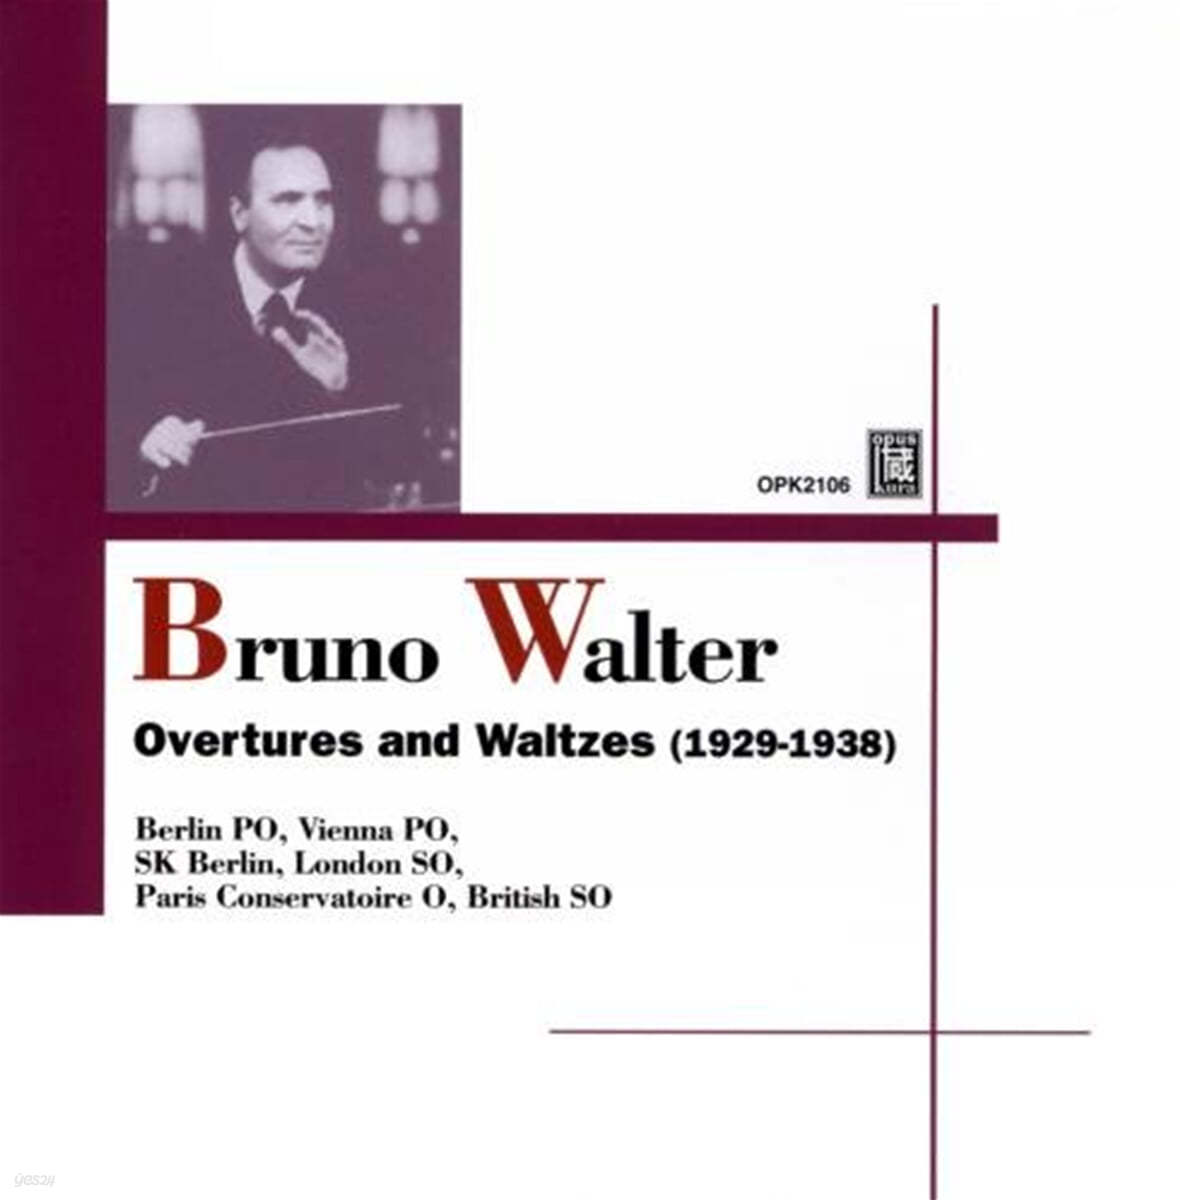 Bruno Walter 서곡과 왈츠 1929-1938 - 브루노 발터 (Overtures and Waltzes) 